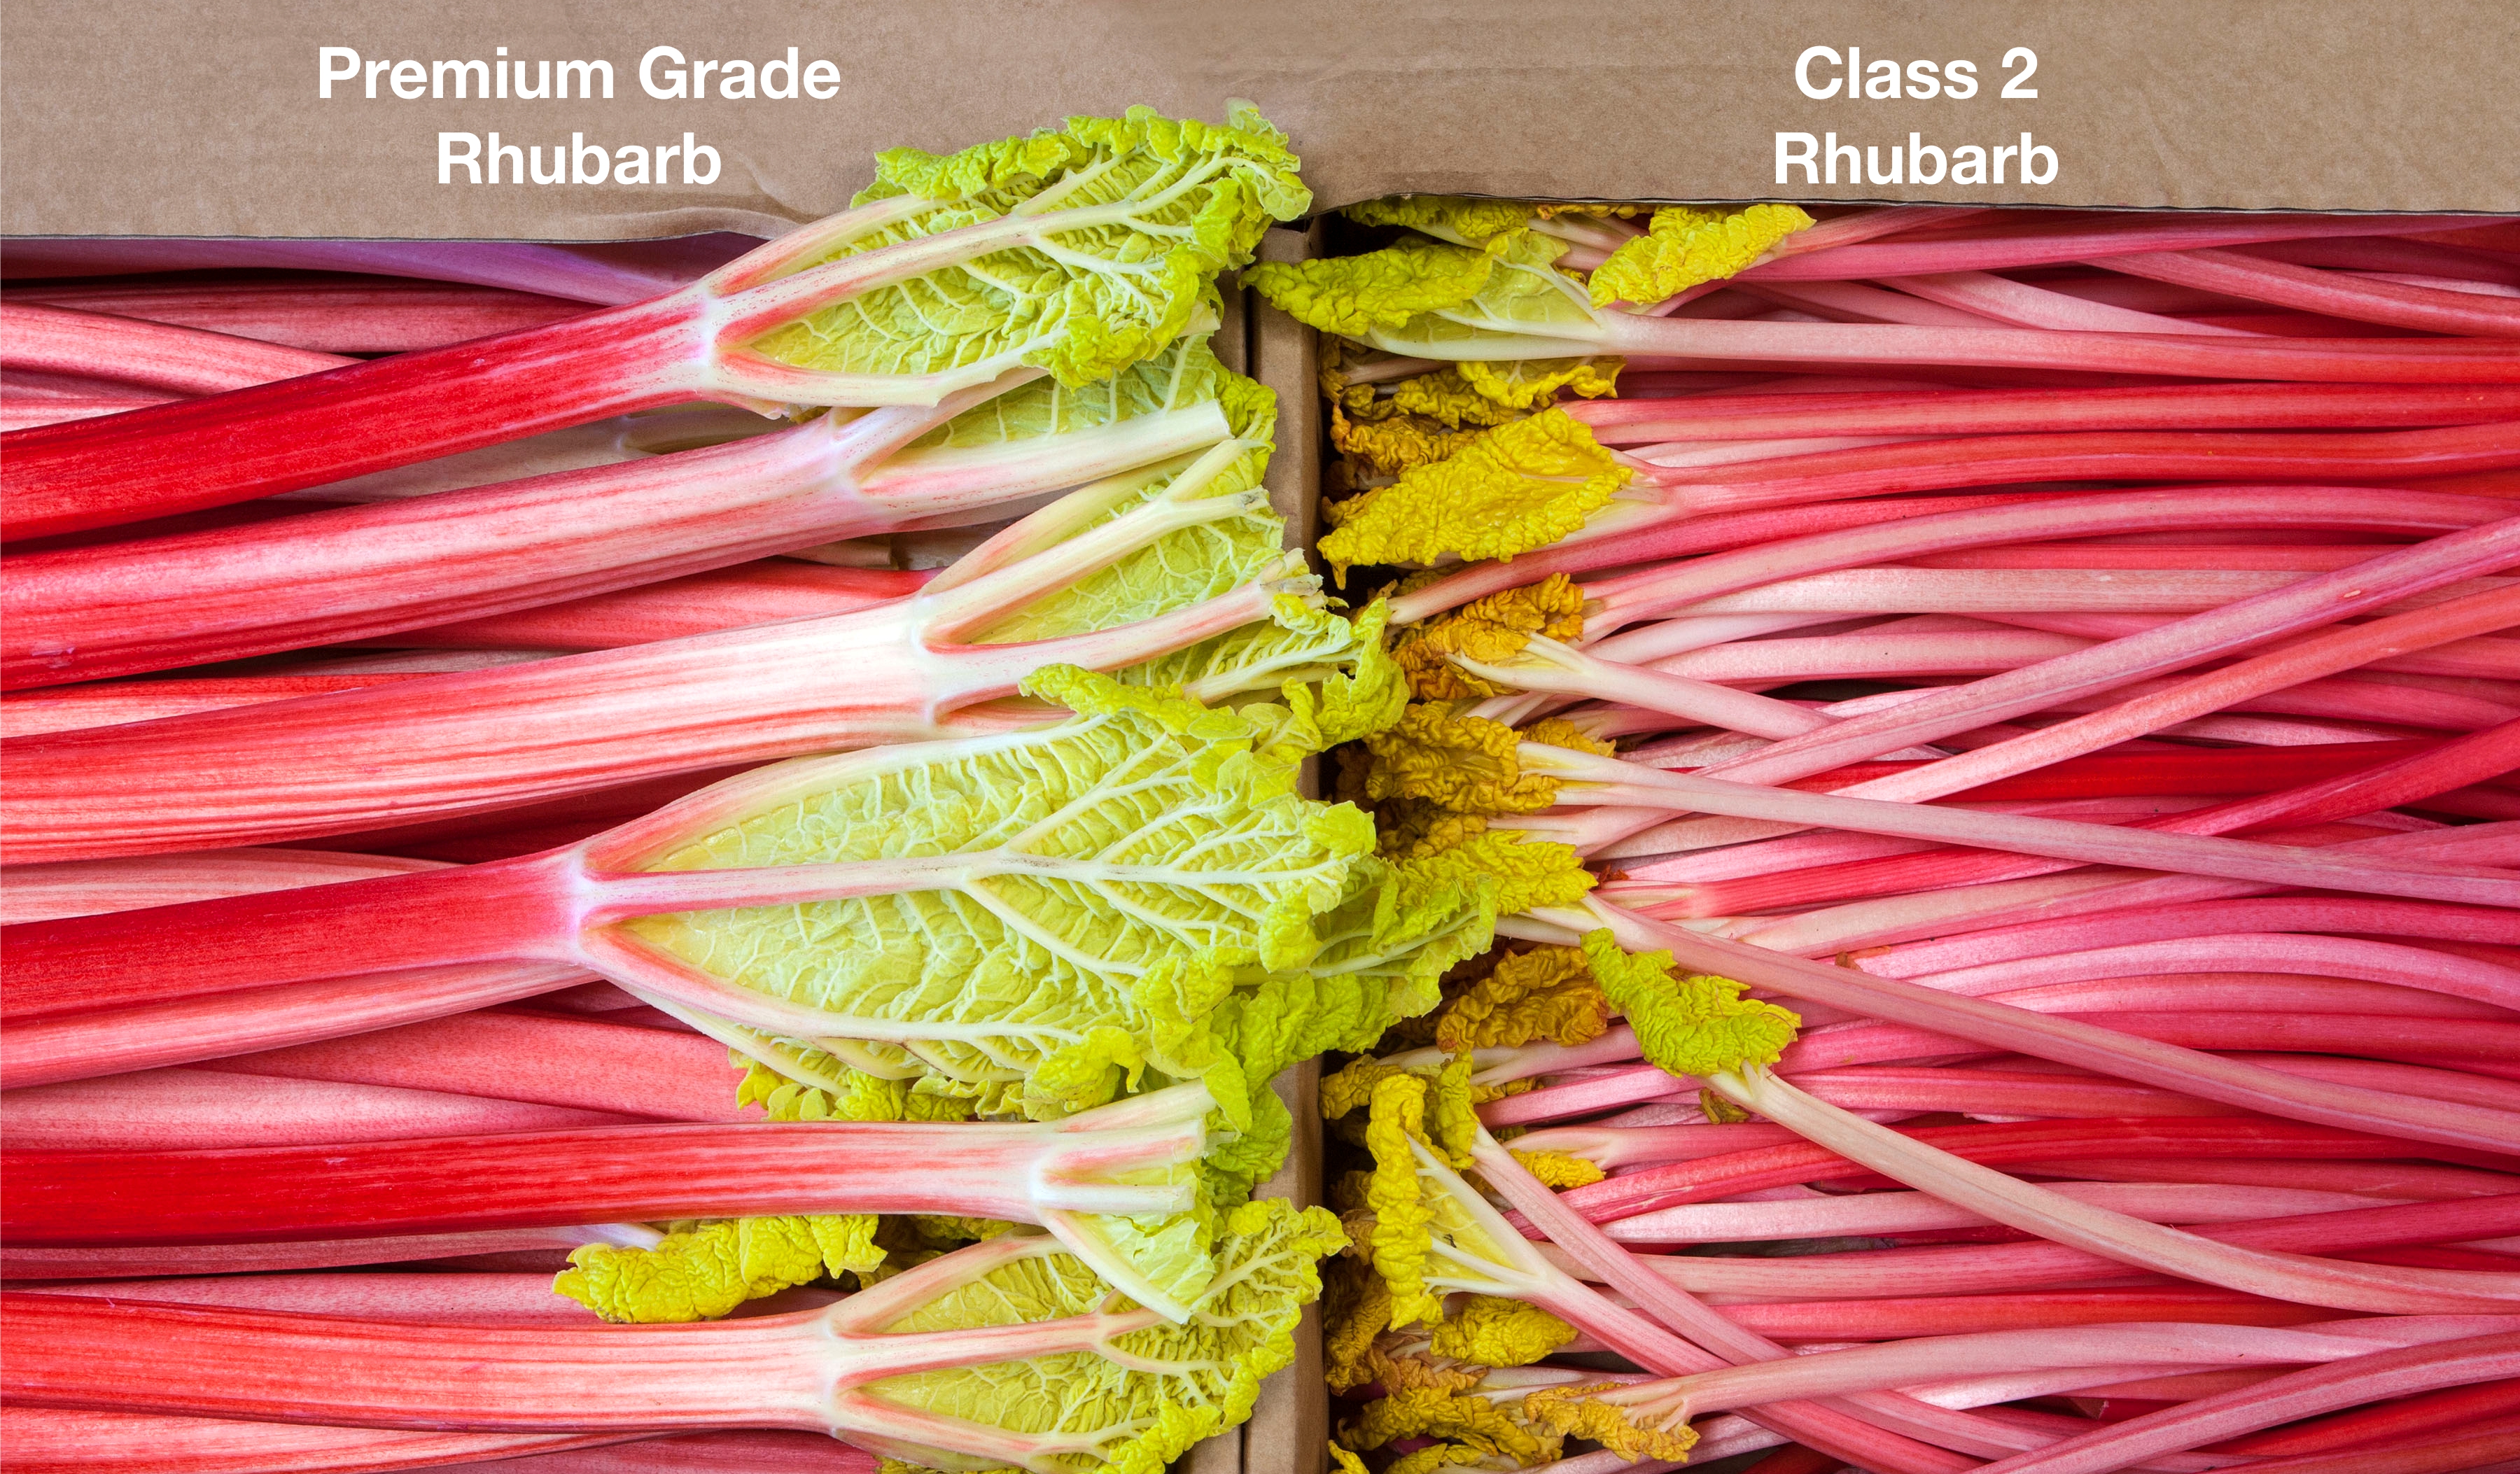 Rhubarb grades